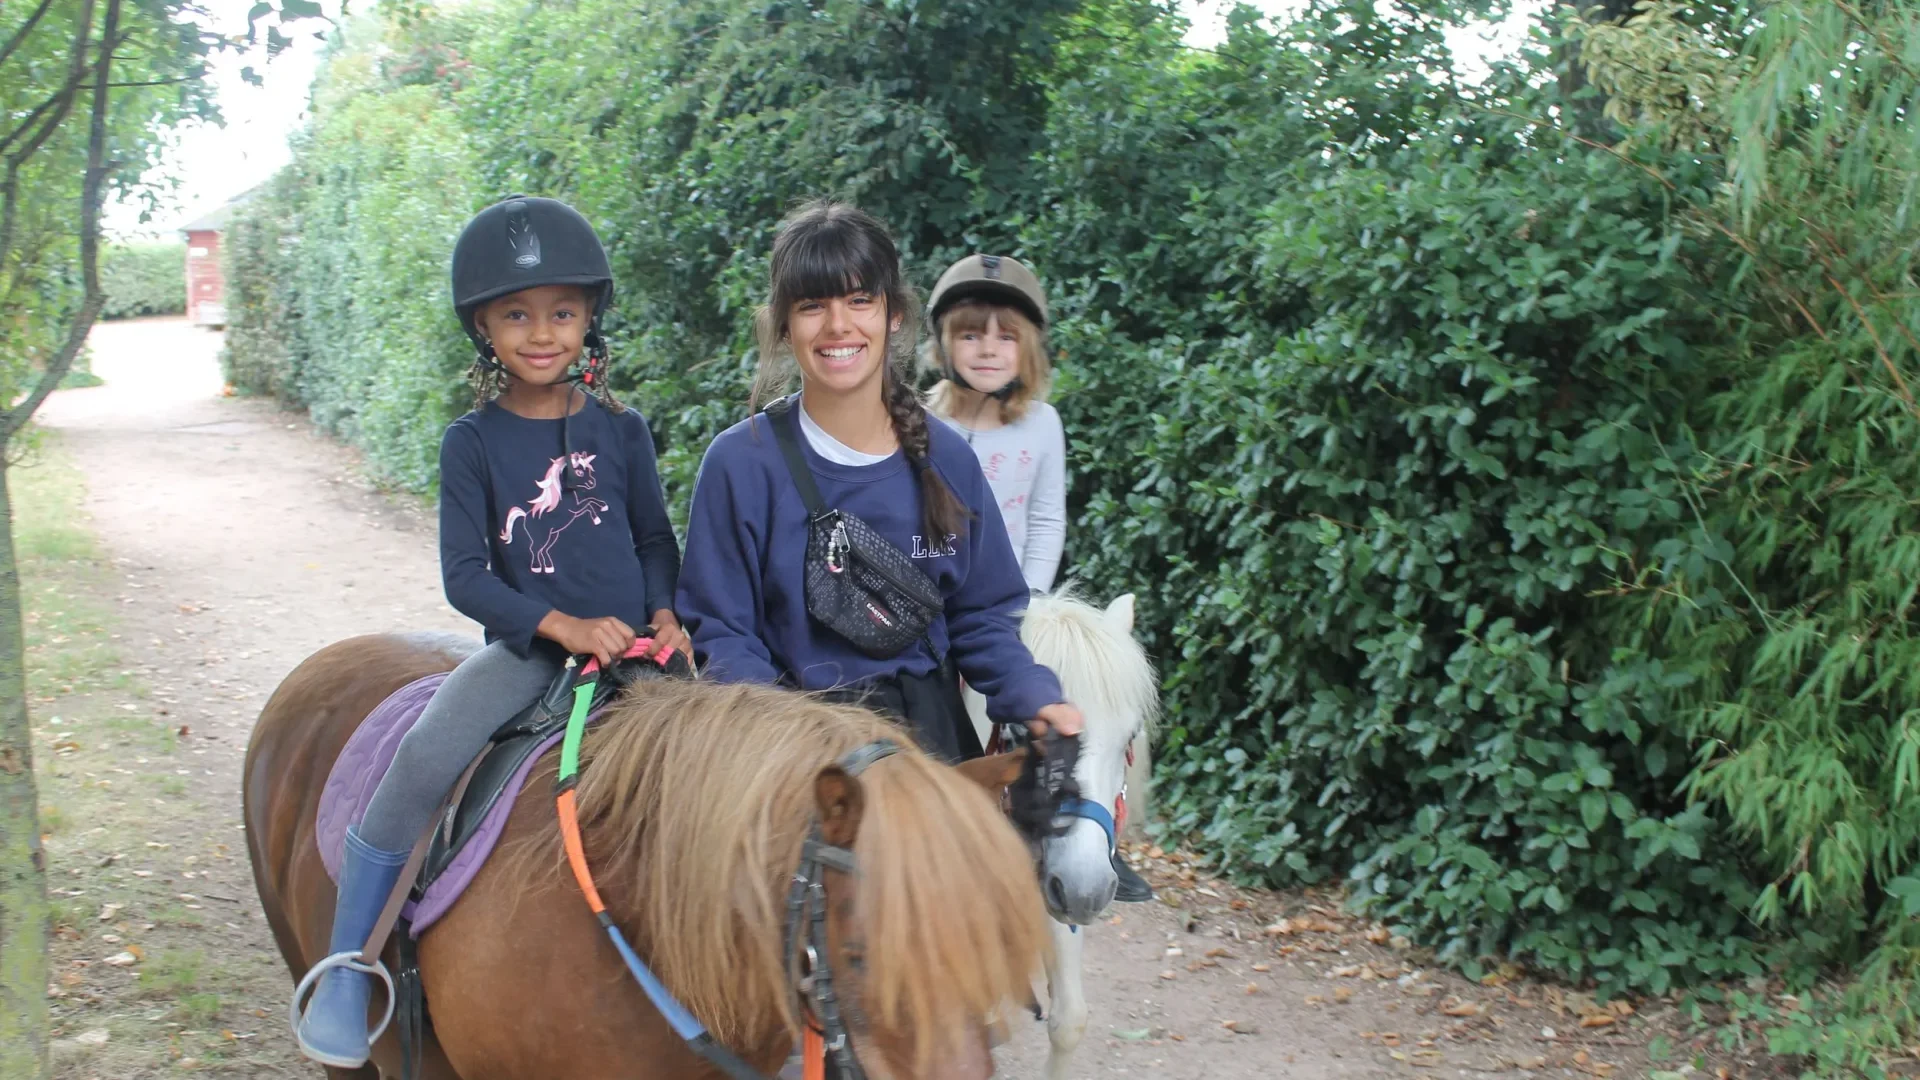 Pony ride for children